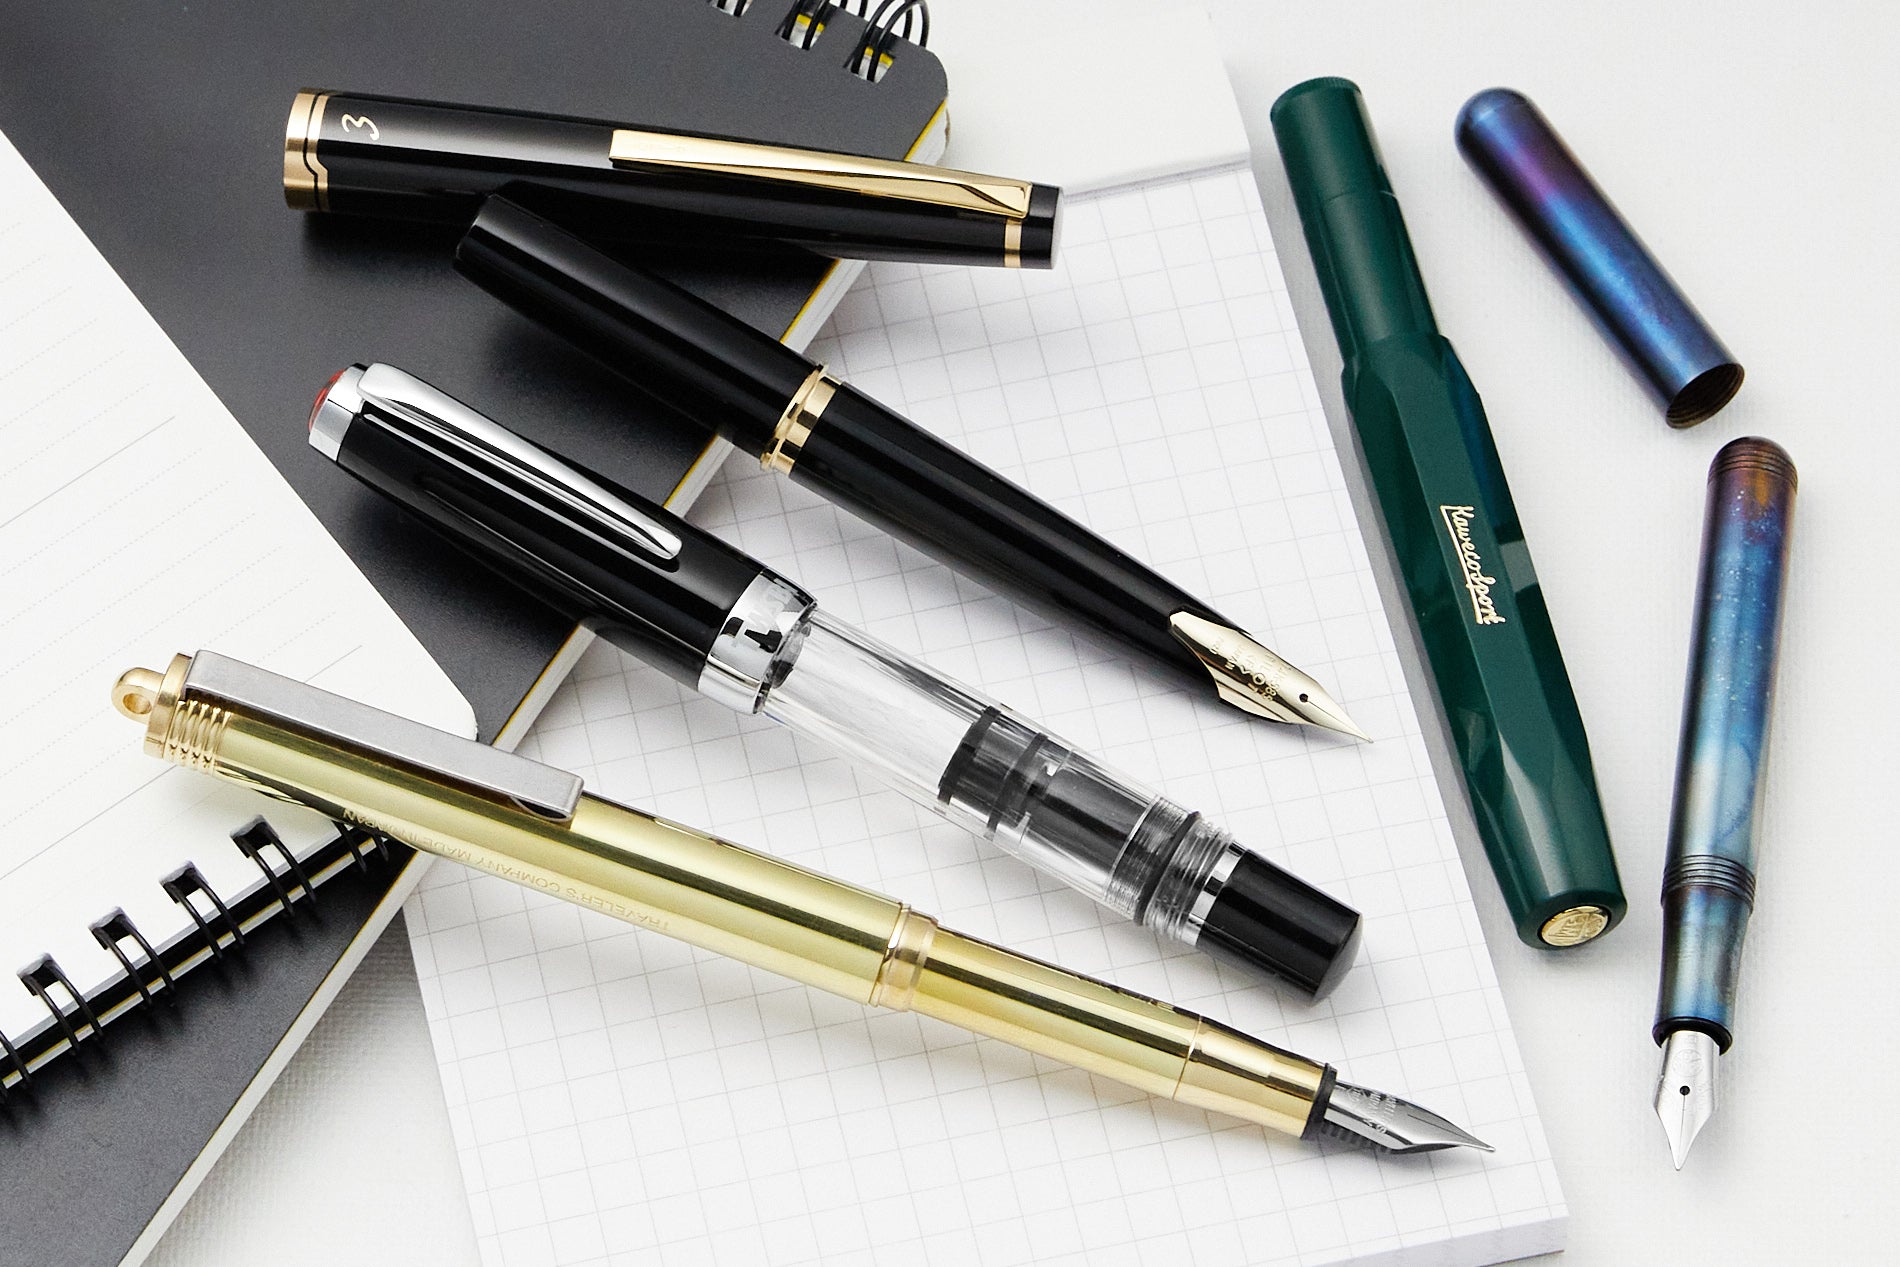 Small Brass Pen Creative Brass Journal Pens Journal Pens Brass Short  Ballpoint Pens For Journaling Brass Writing Tools For Home